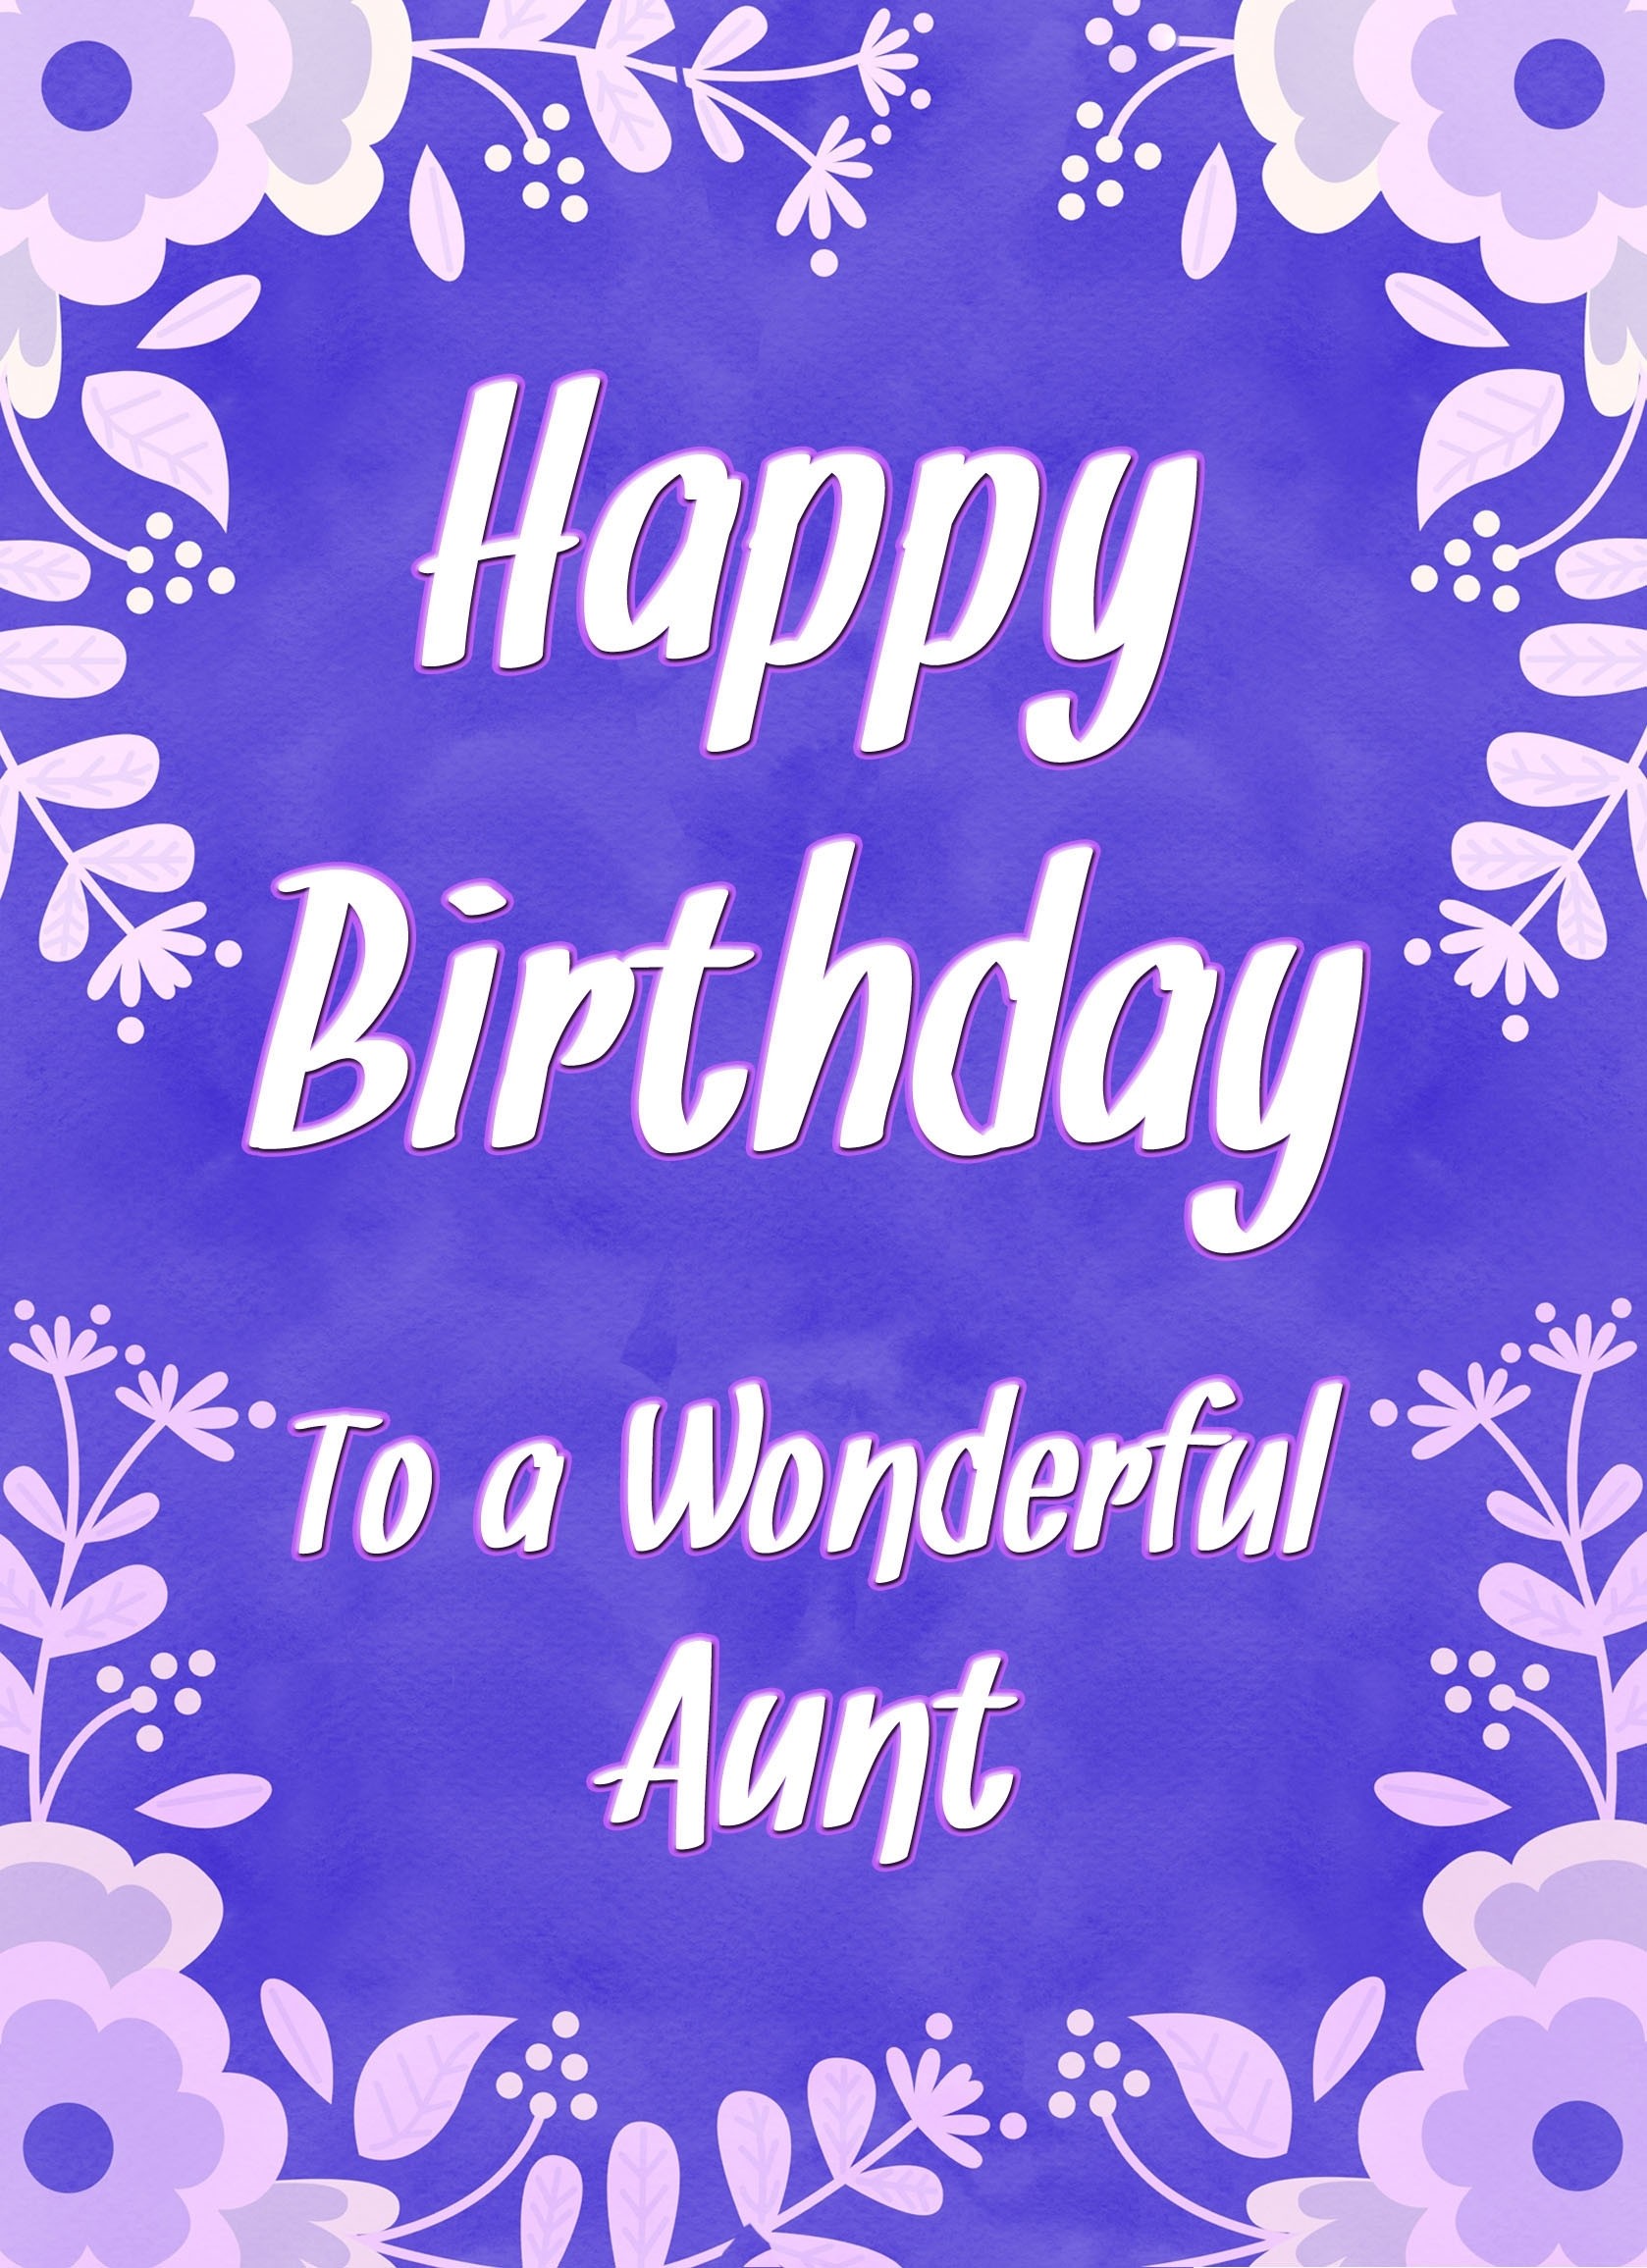 Birthday Card For Wonderful Aunt (Purple Border)